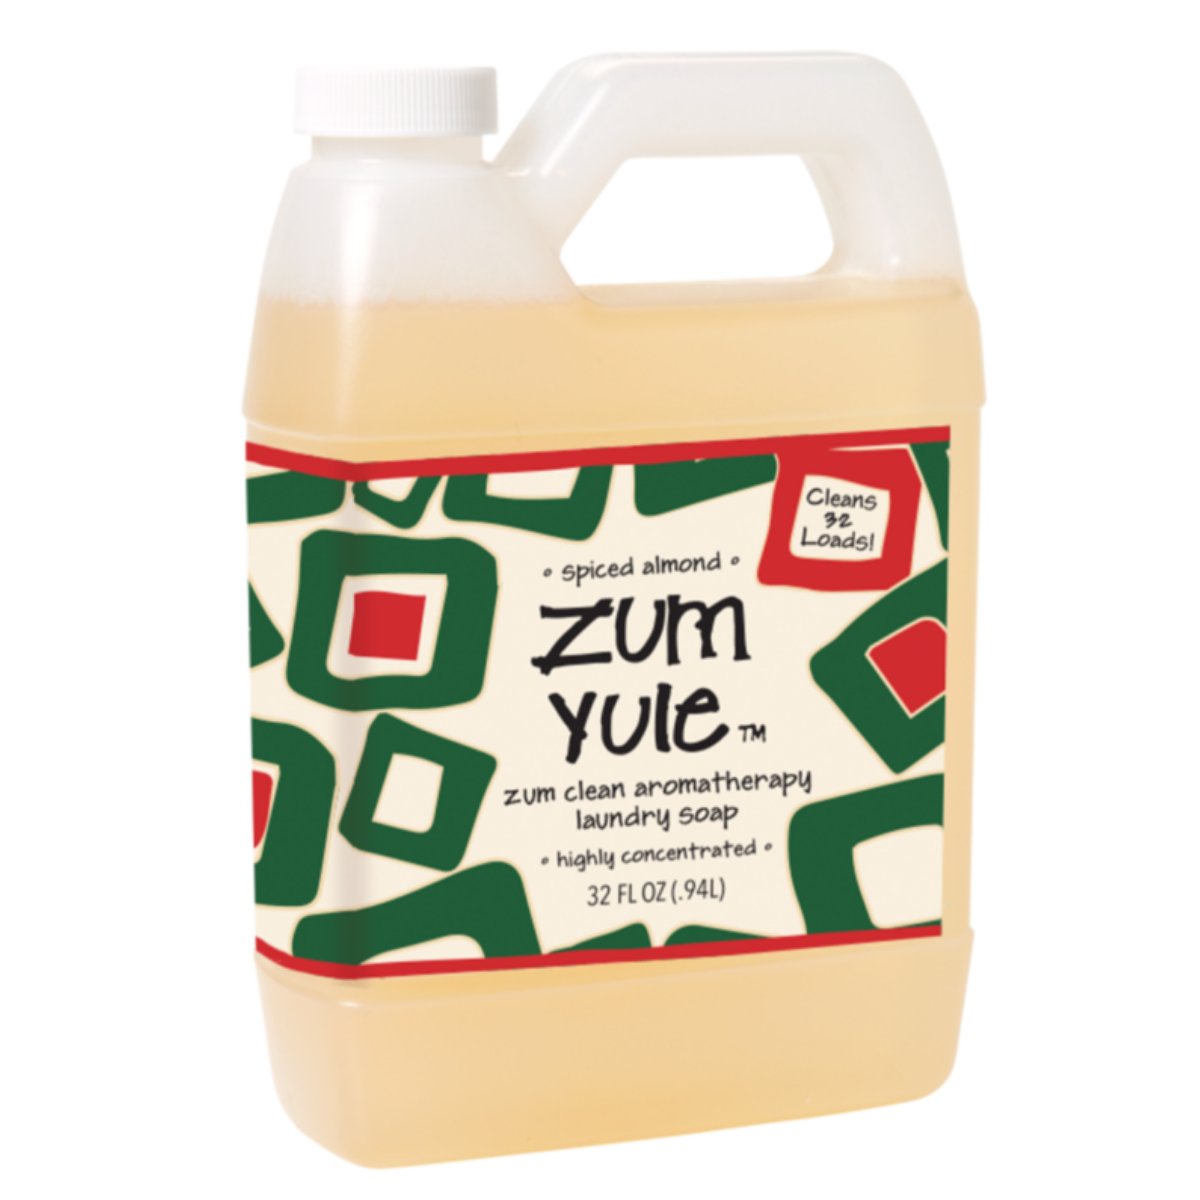 Primary image of Zum Yule Laundry Soap